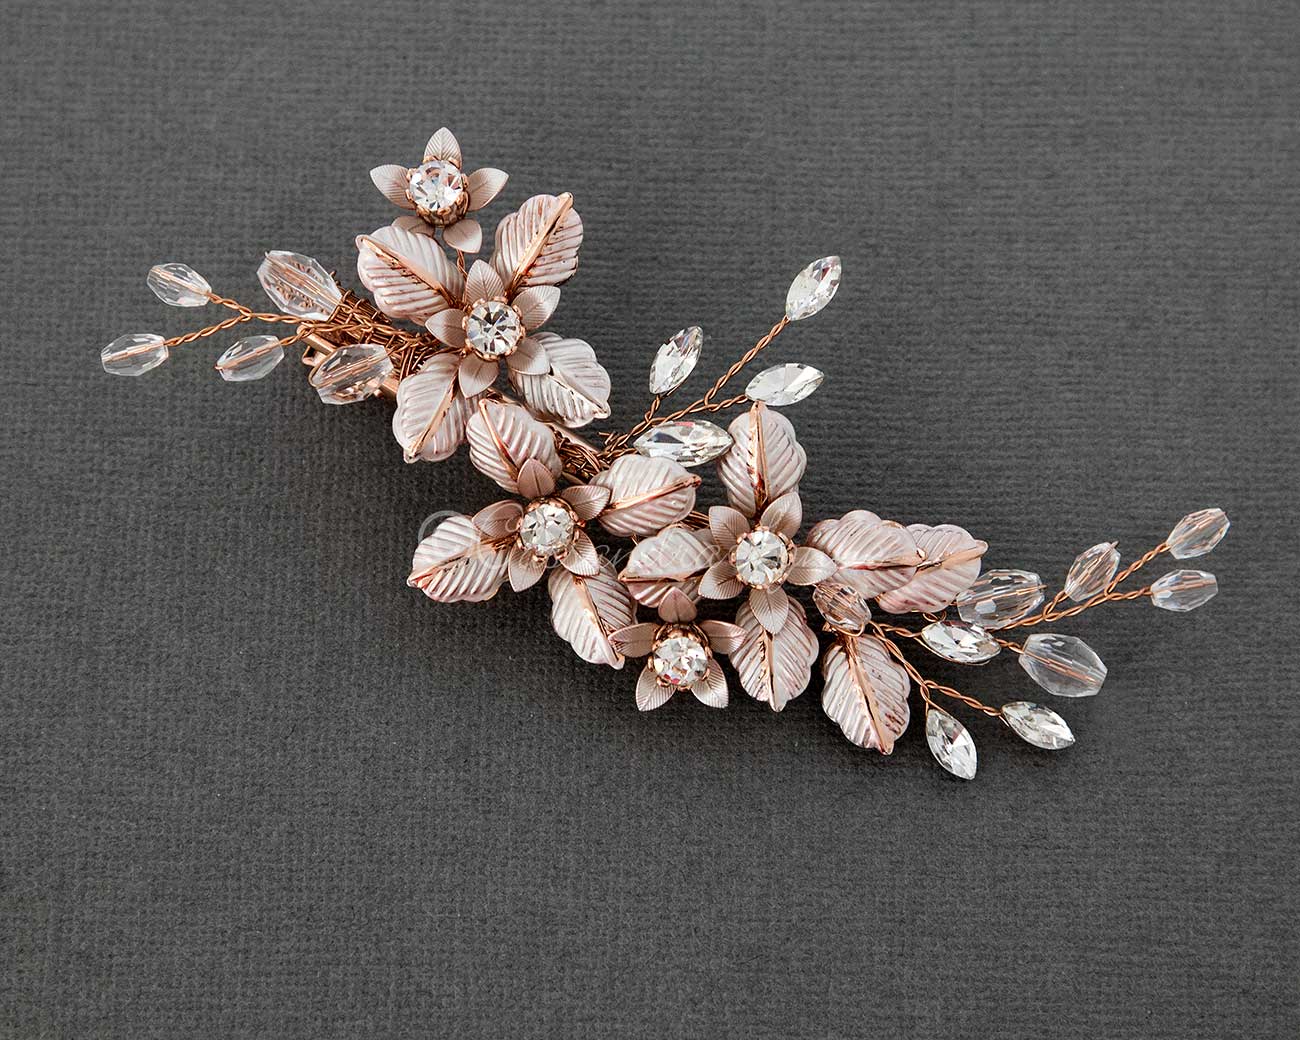 Petite Crystal Bridal Hair Clip of Brushed Metal Flowers - Cassandra Lynne